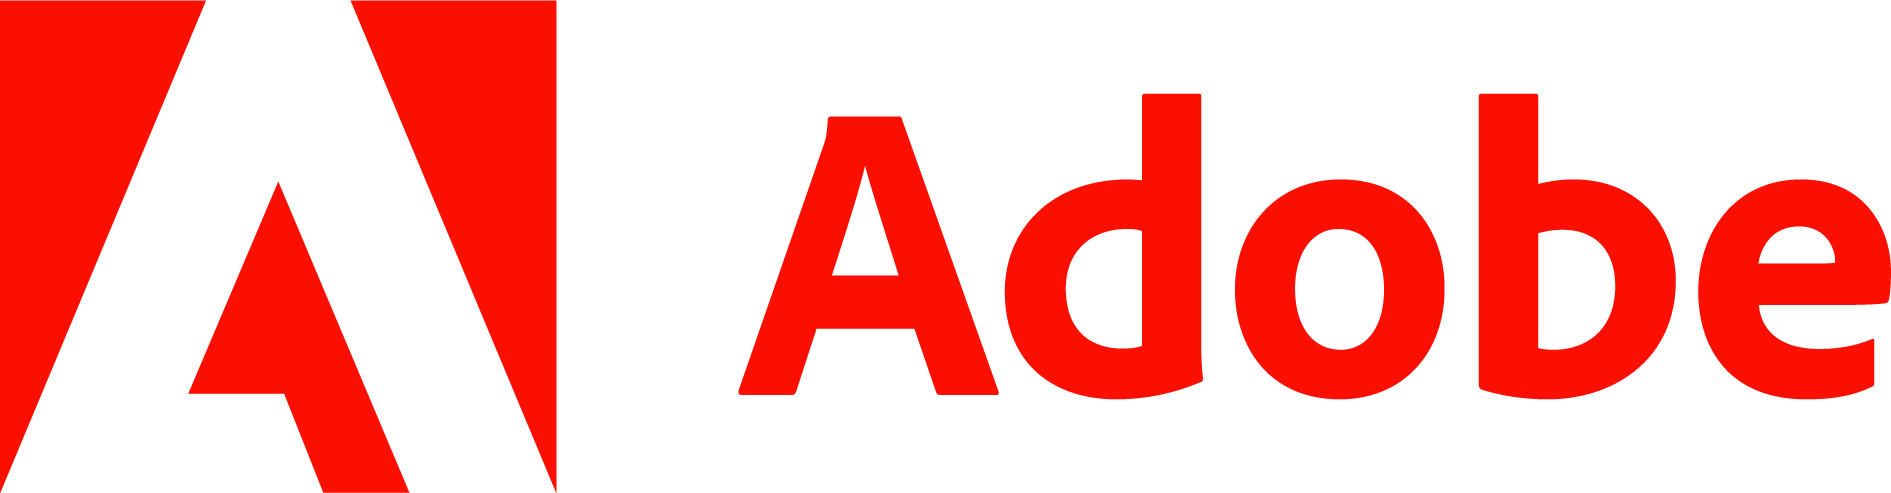 Adobe_Corporate_Logo avado villadata